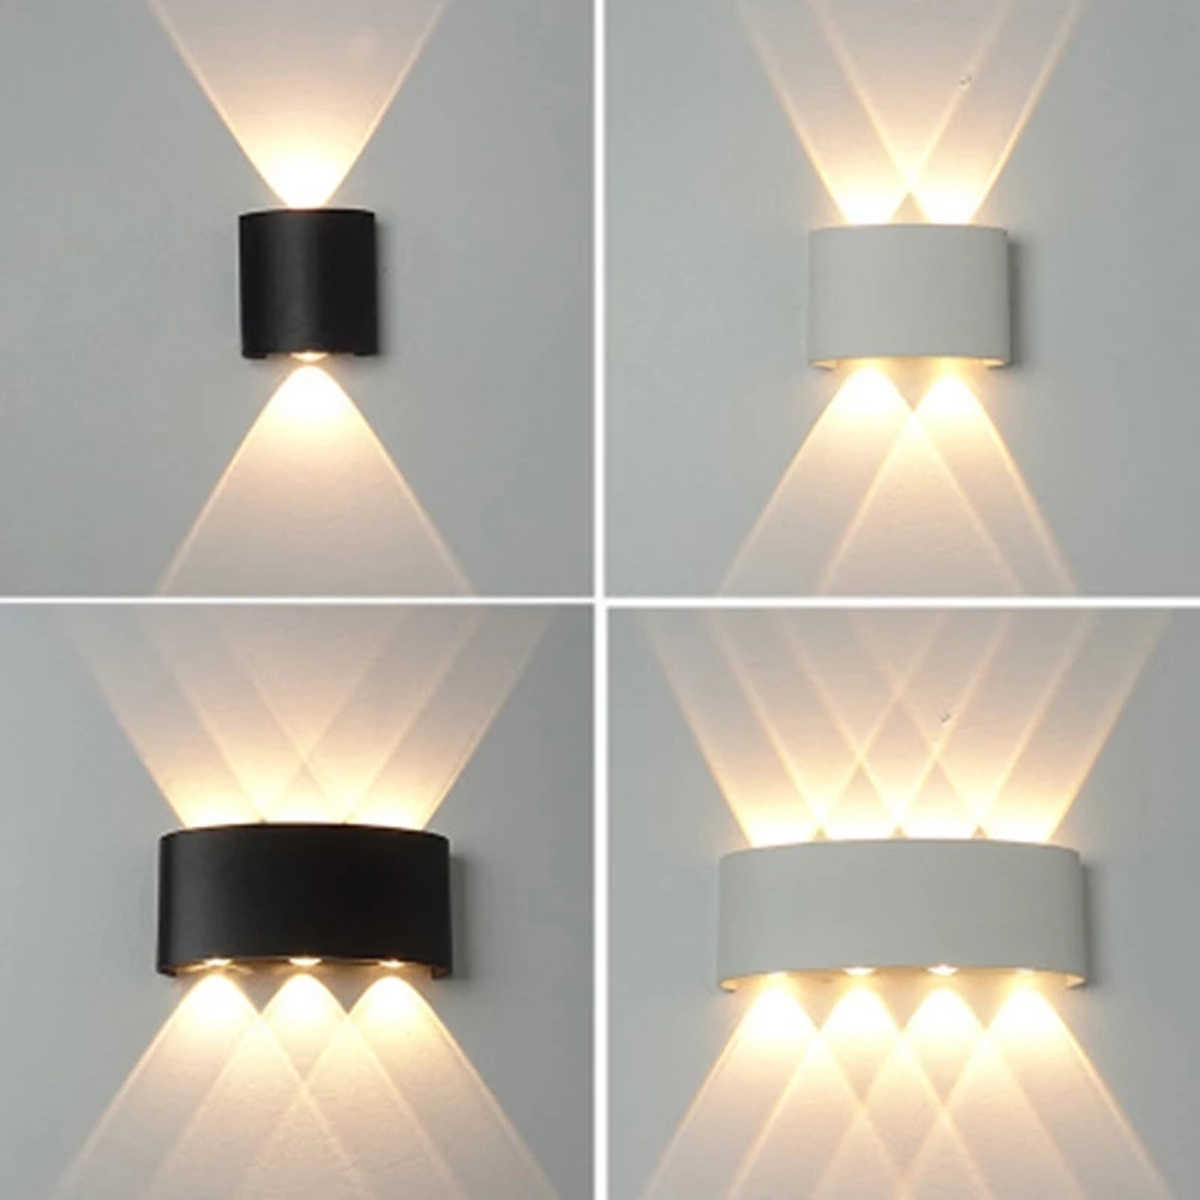 Waterproof-2-8W-LED-Wall-Light-Up-Down-Lighting-Sconce-Lamp-Indoor-Outdoor-IP65-1850910-3